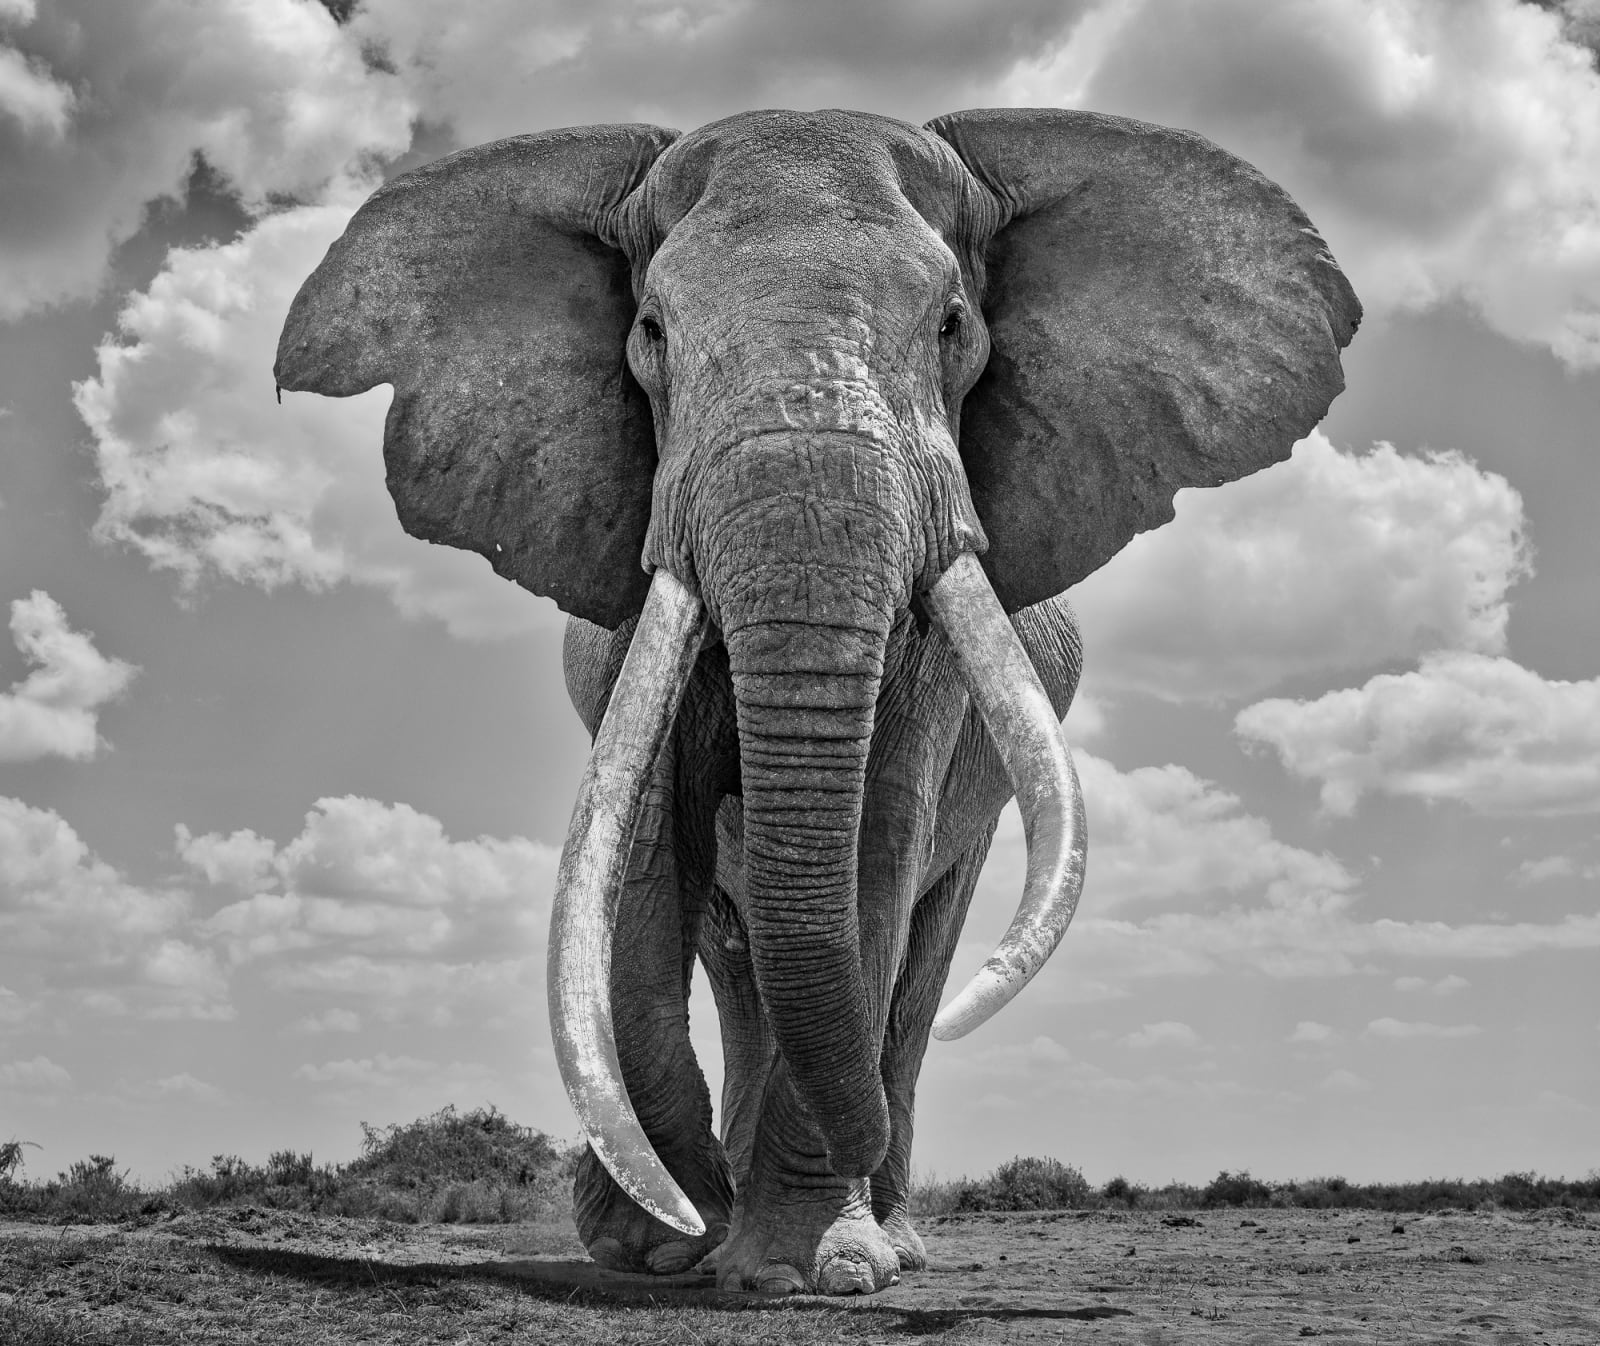 James Lewin, 21st Century Mammoth. Amboseli, Kenya | The Drang Gallery